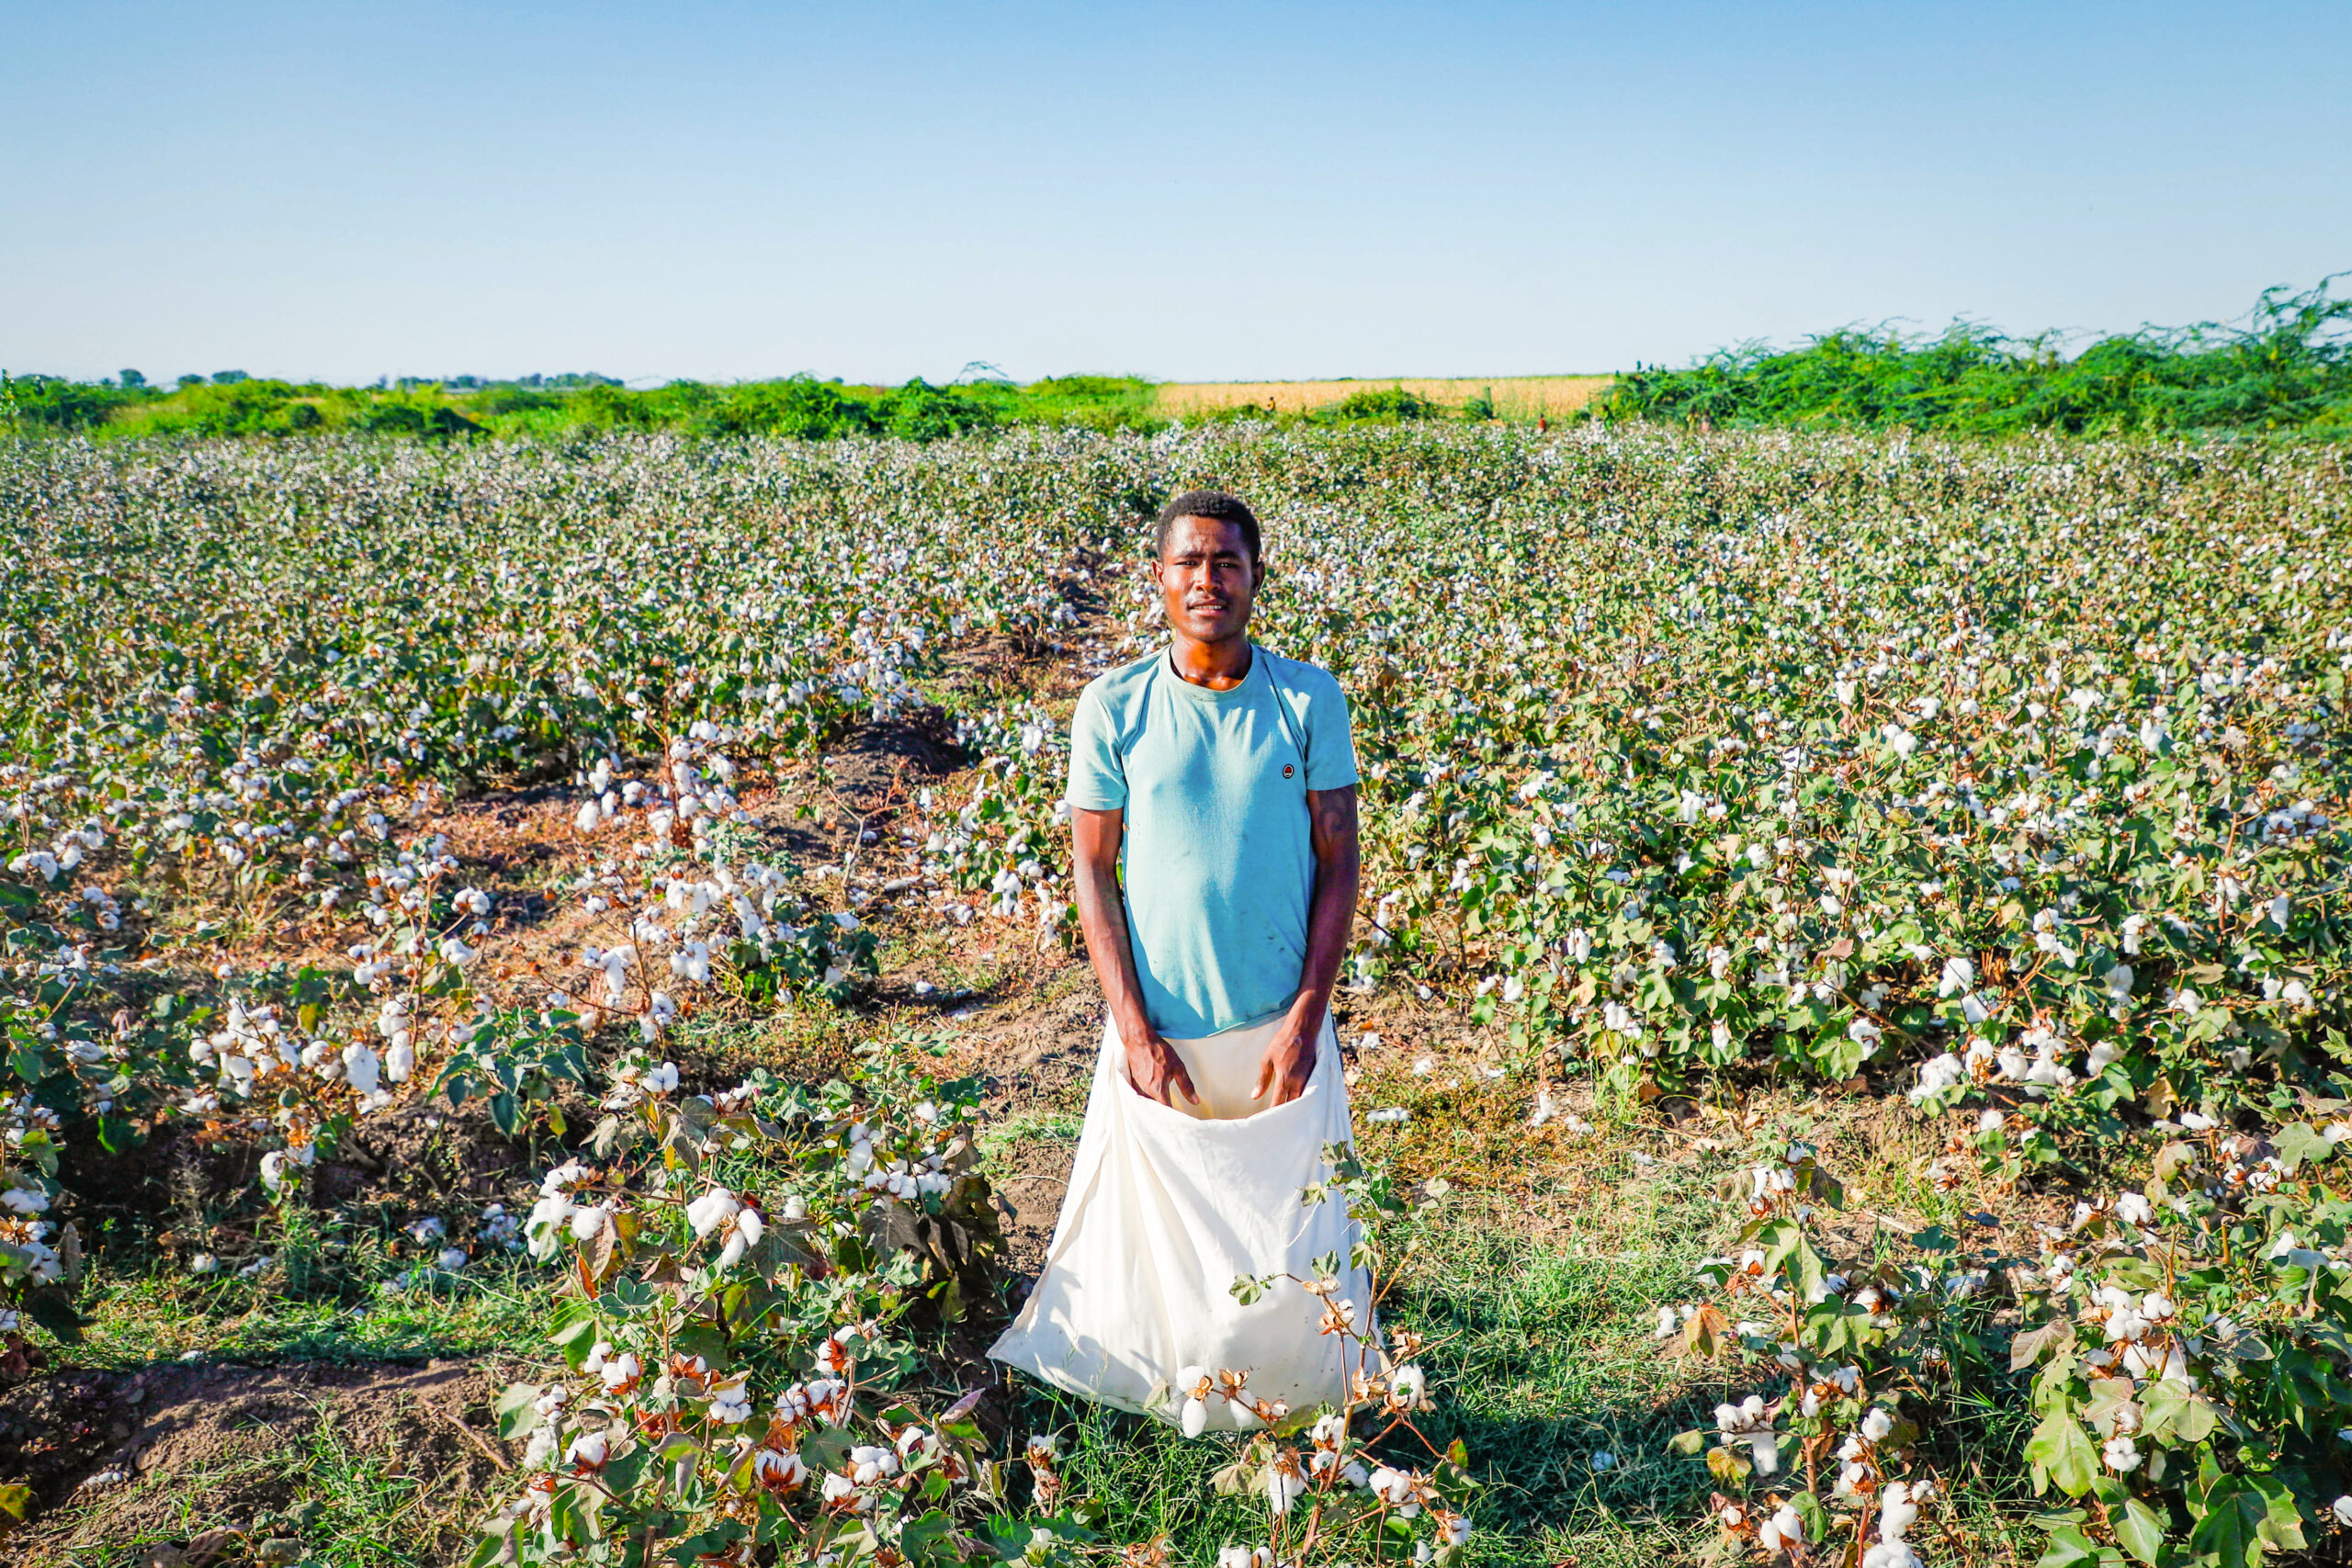 farmer standing in a cotton field in Ethiopia